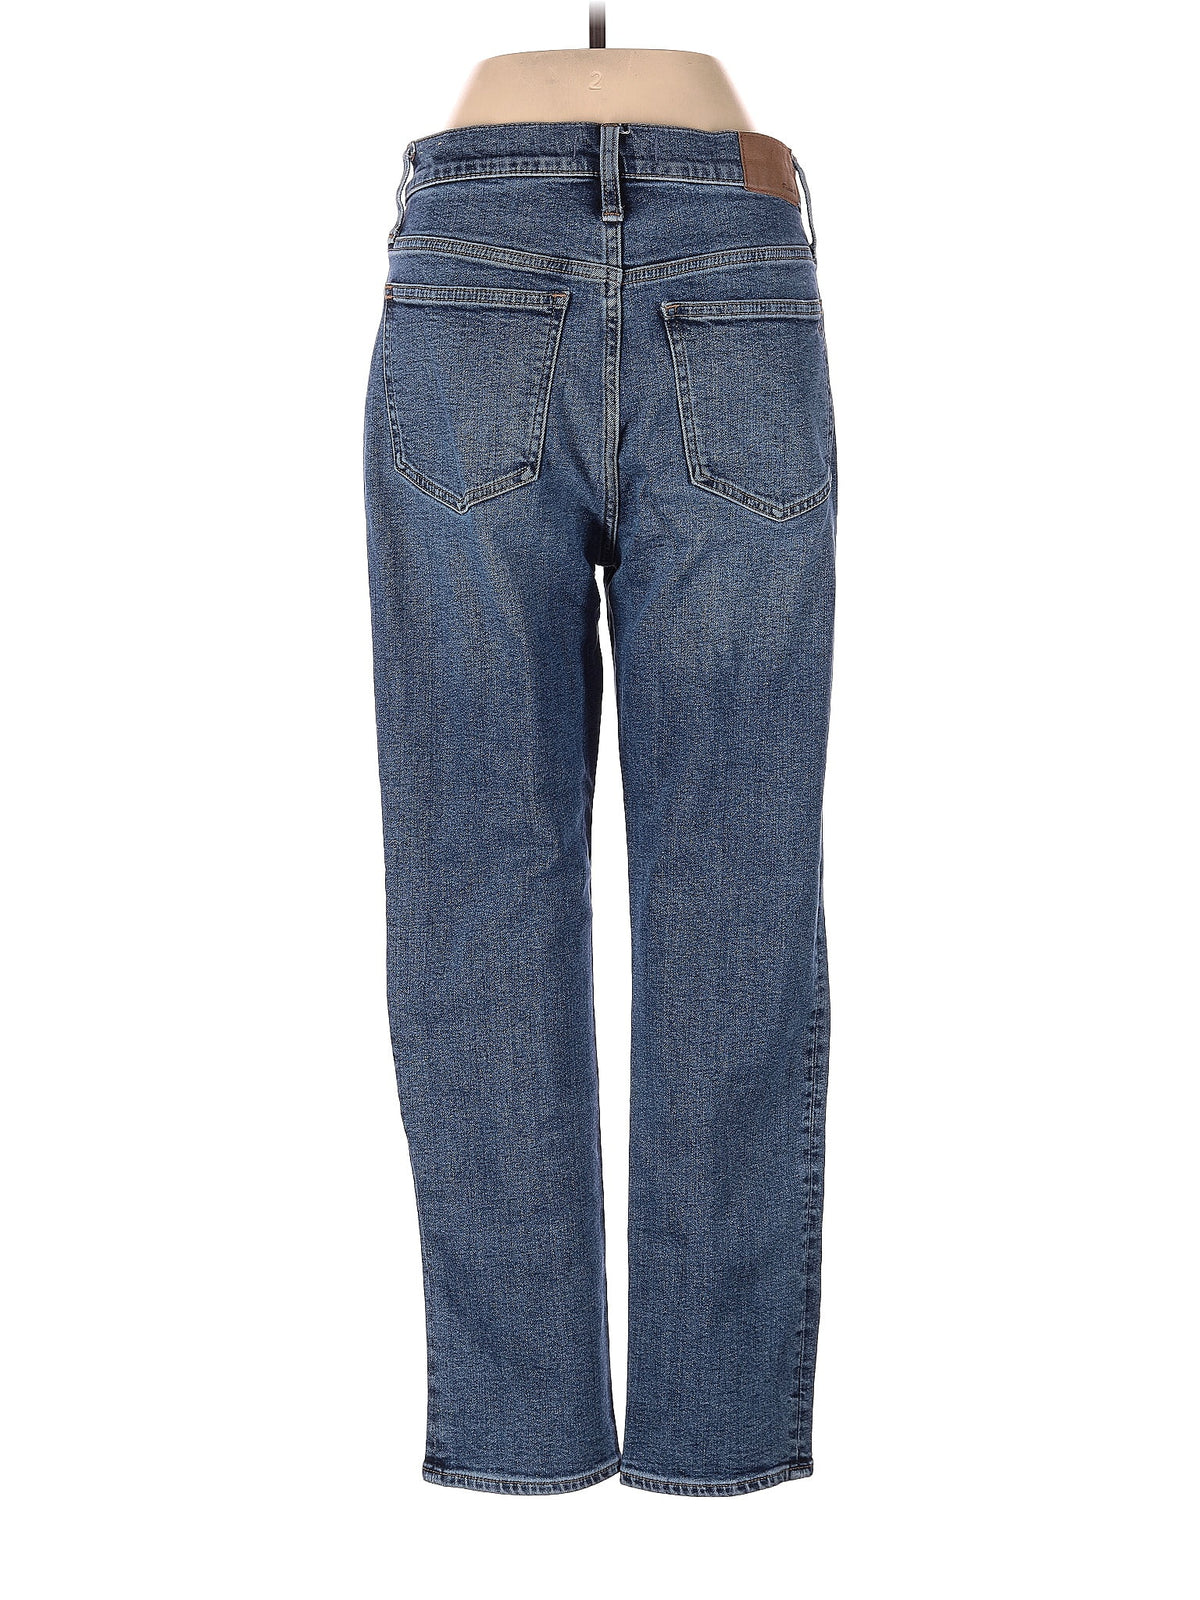 Mid-Rise Straight-leg Jeans in Medium Wash waist size - 27